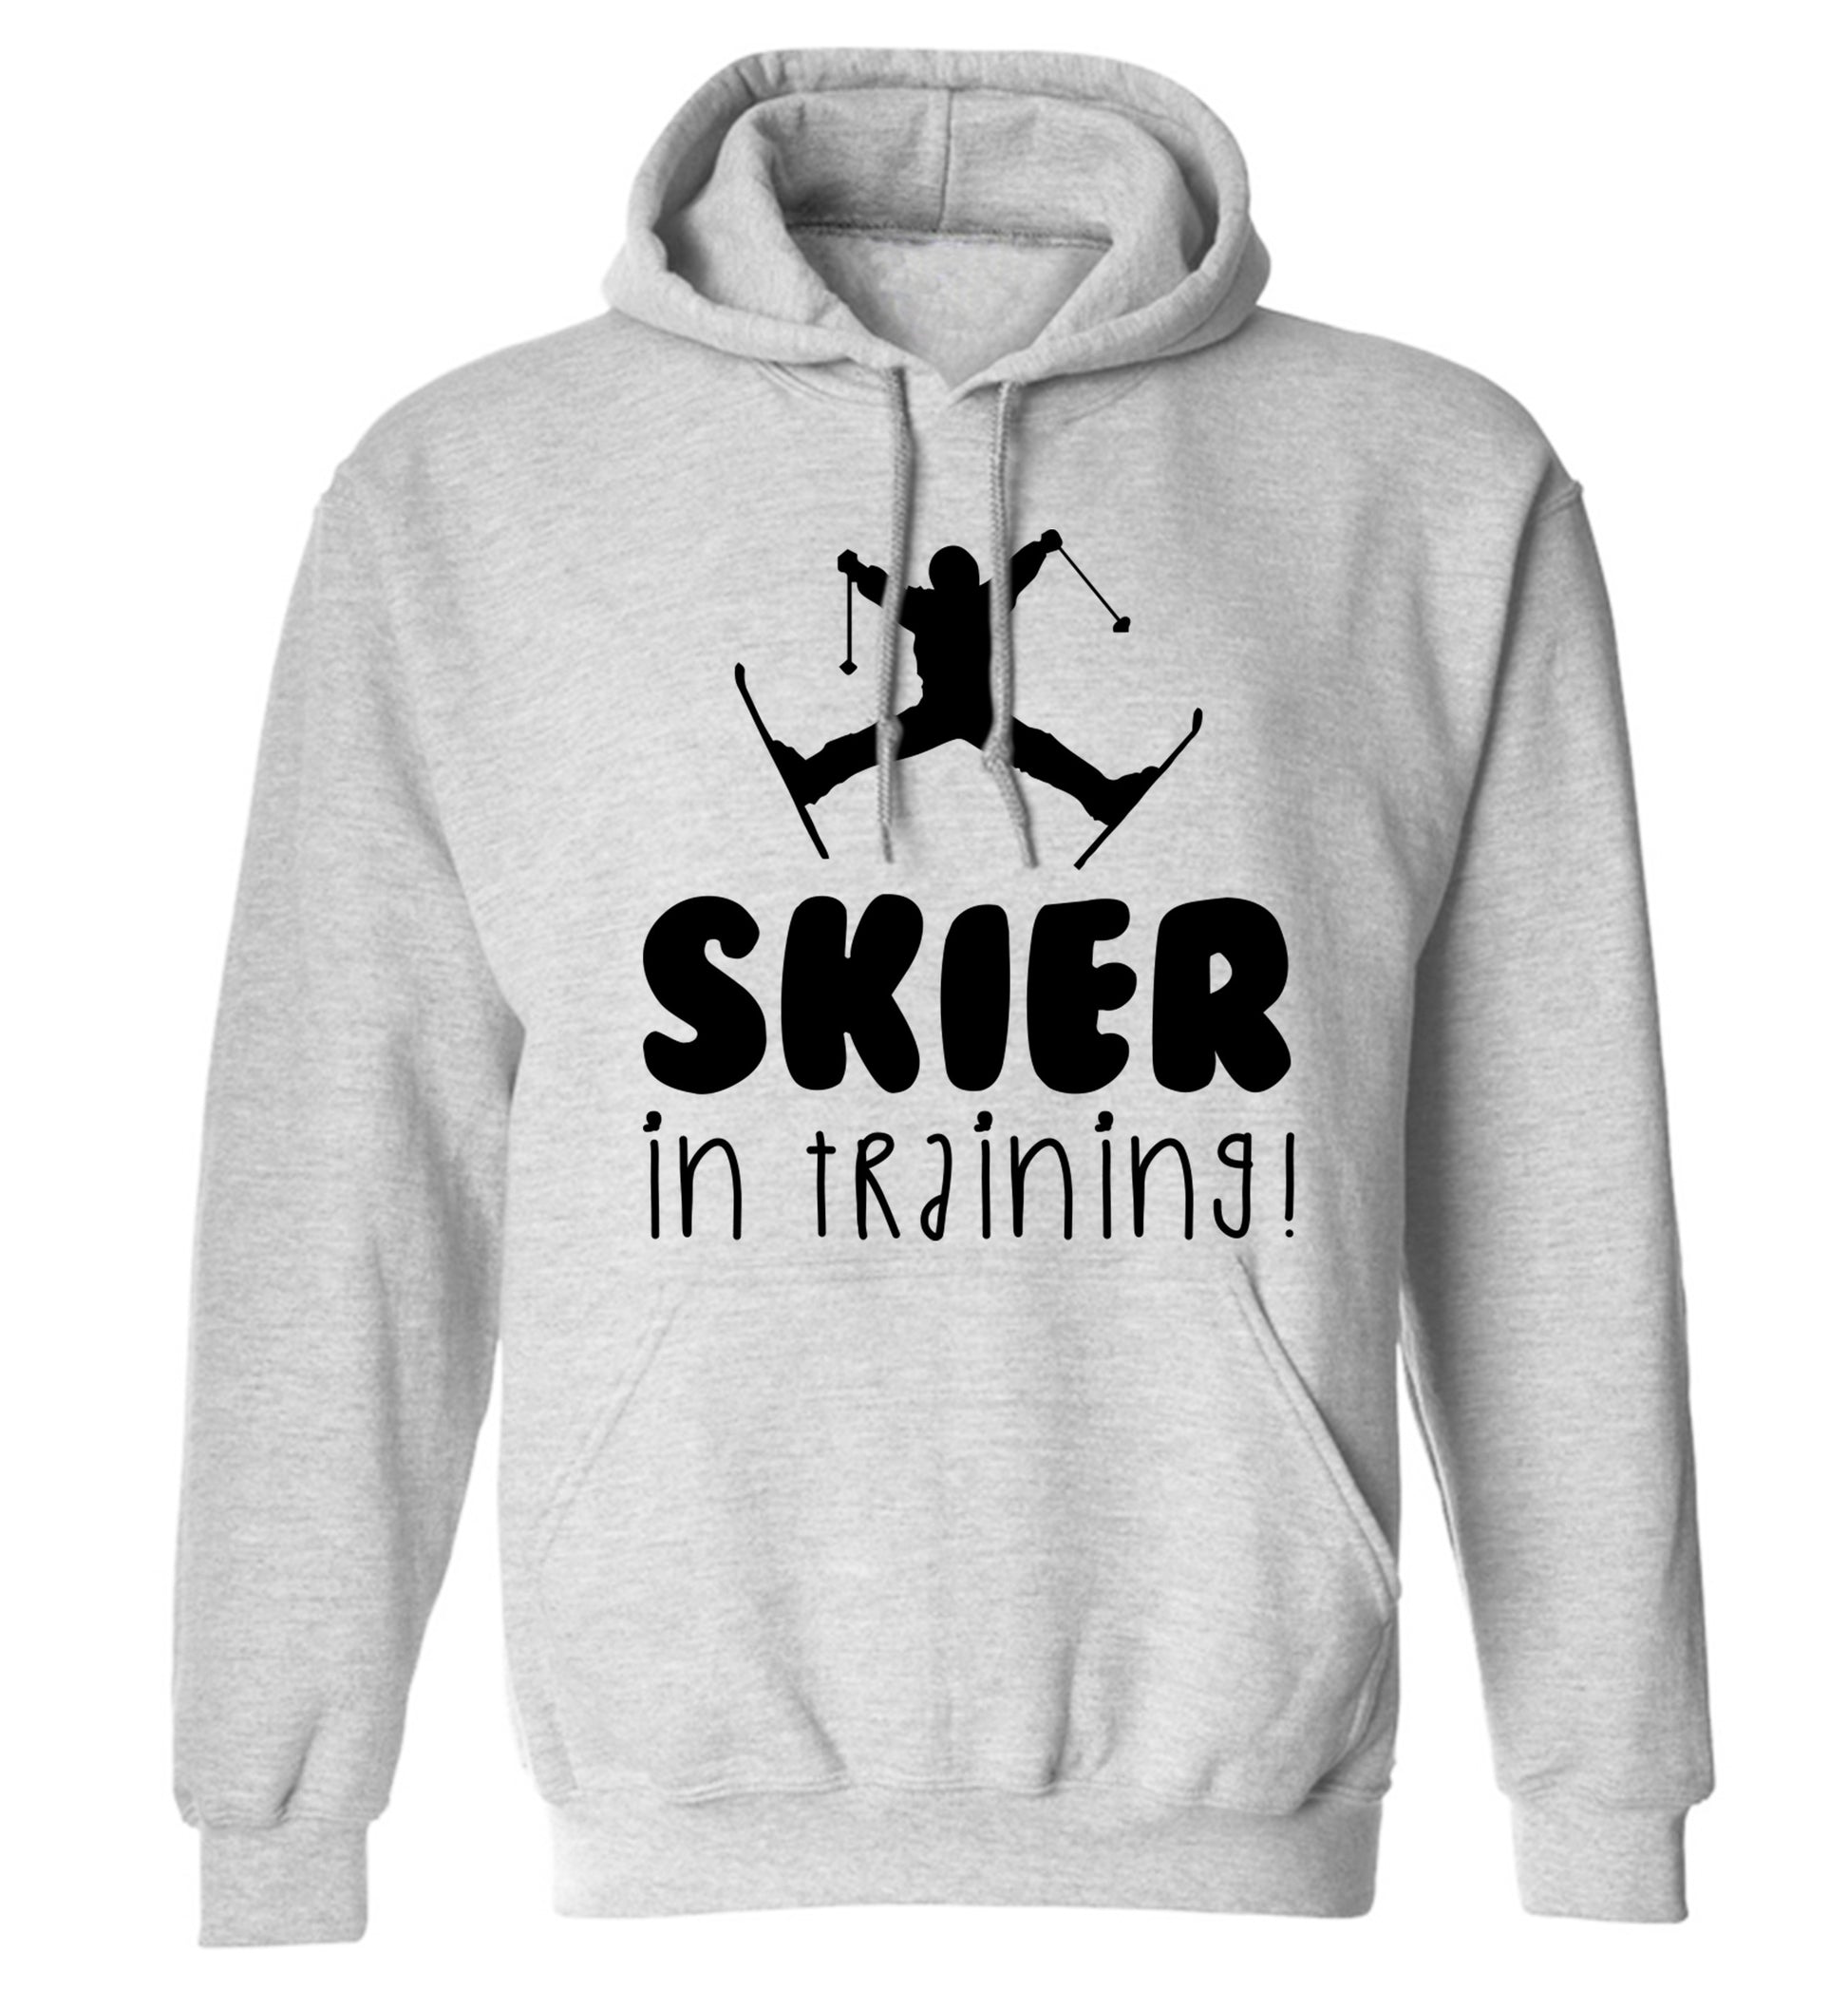 Skier in training adults unisex grey hoodie 2XL